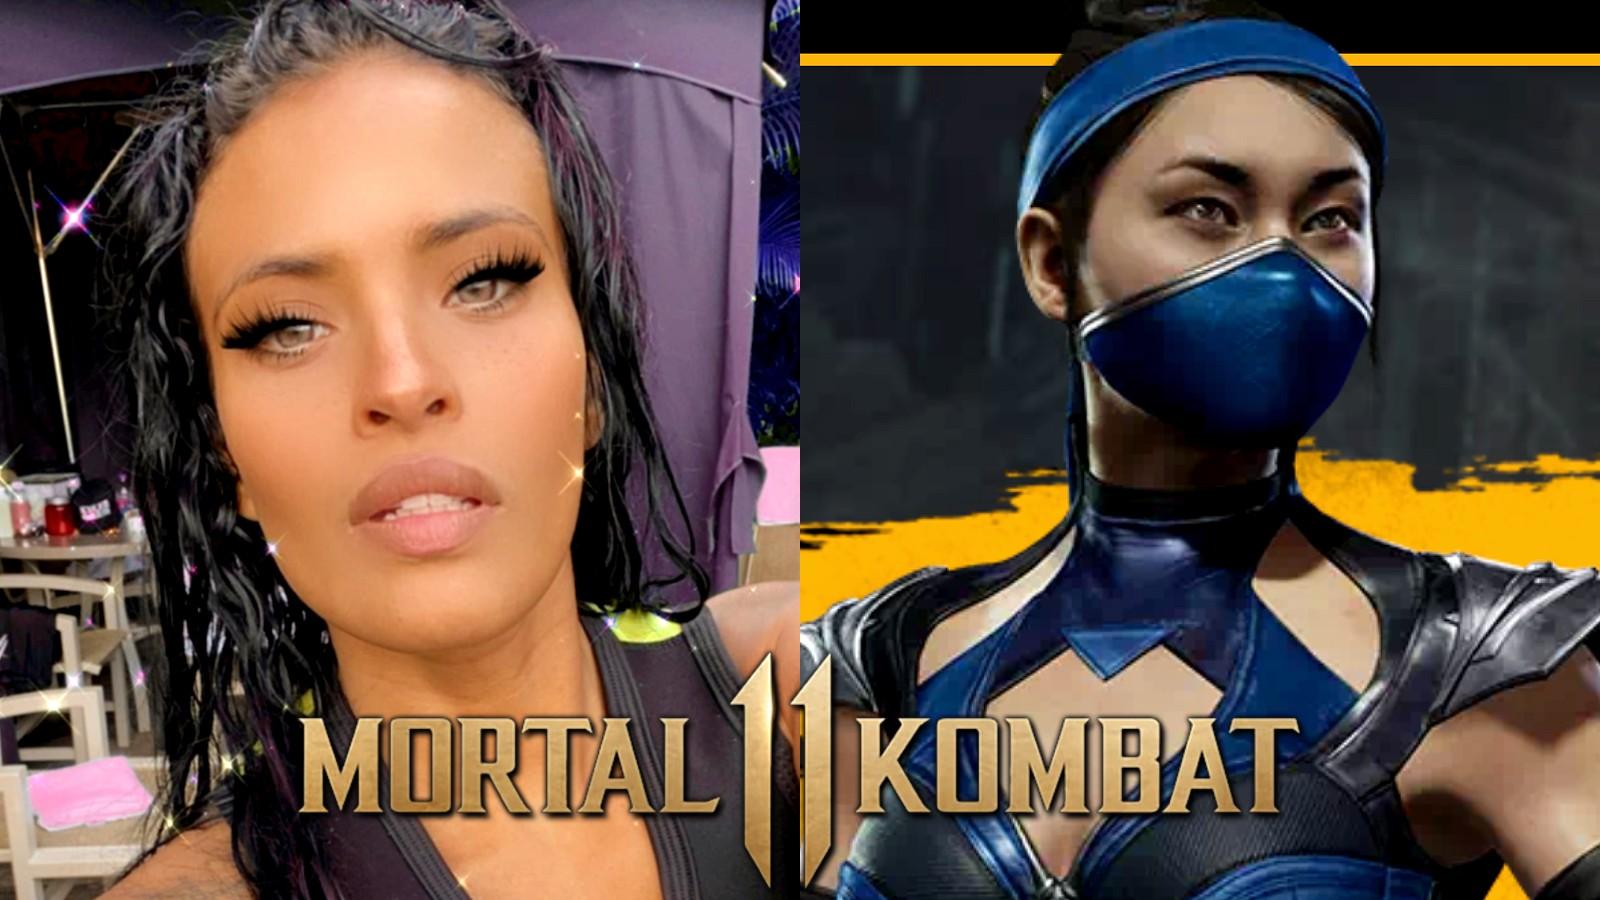 Zelina Vega next to Kitana from Mortal Kombat